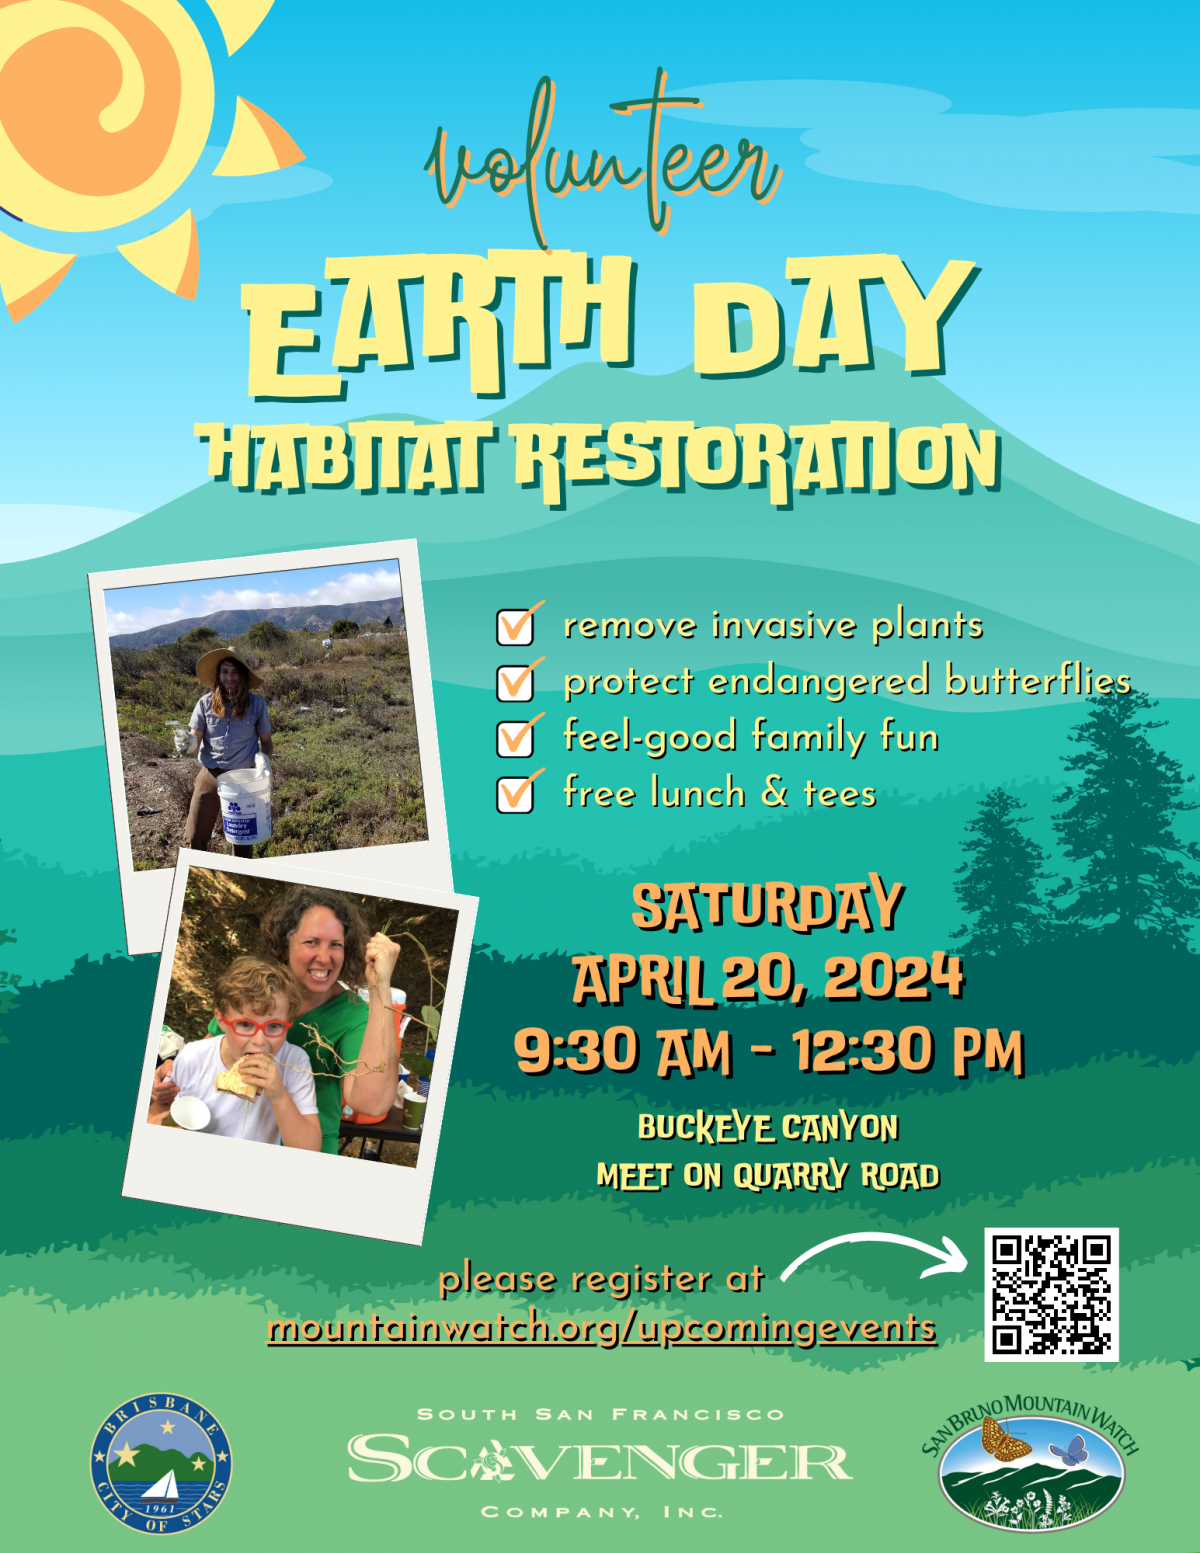 Earth Day Habitat Restoration flyer